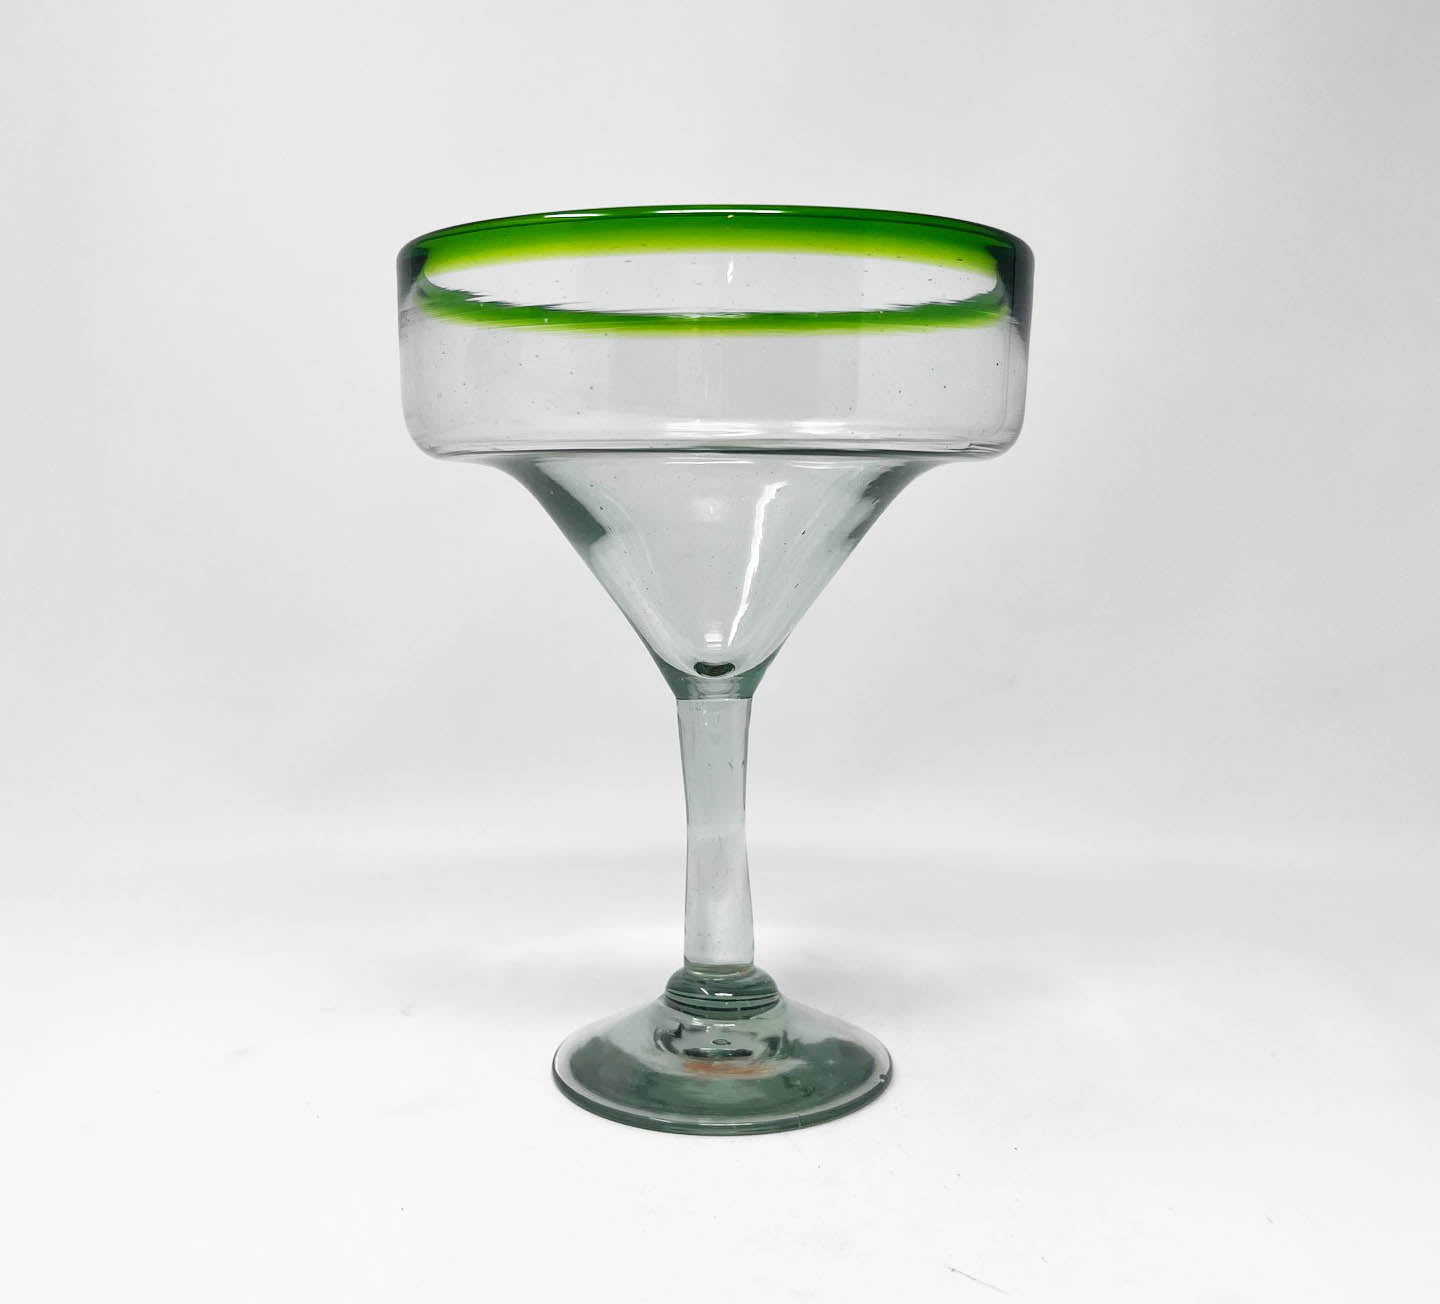 Hand Blown Margarita Glass - Green Rim